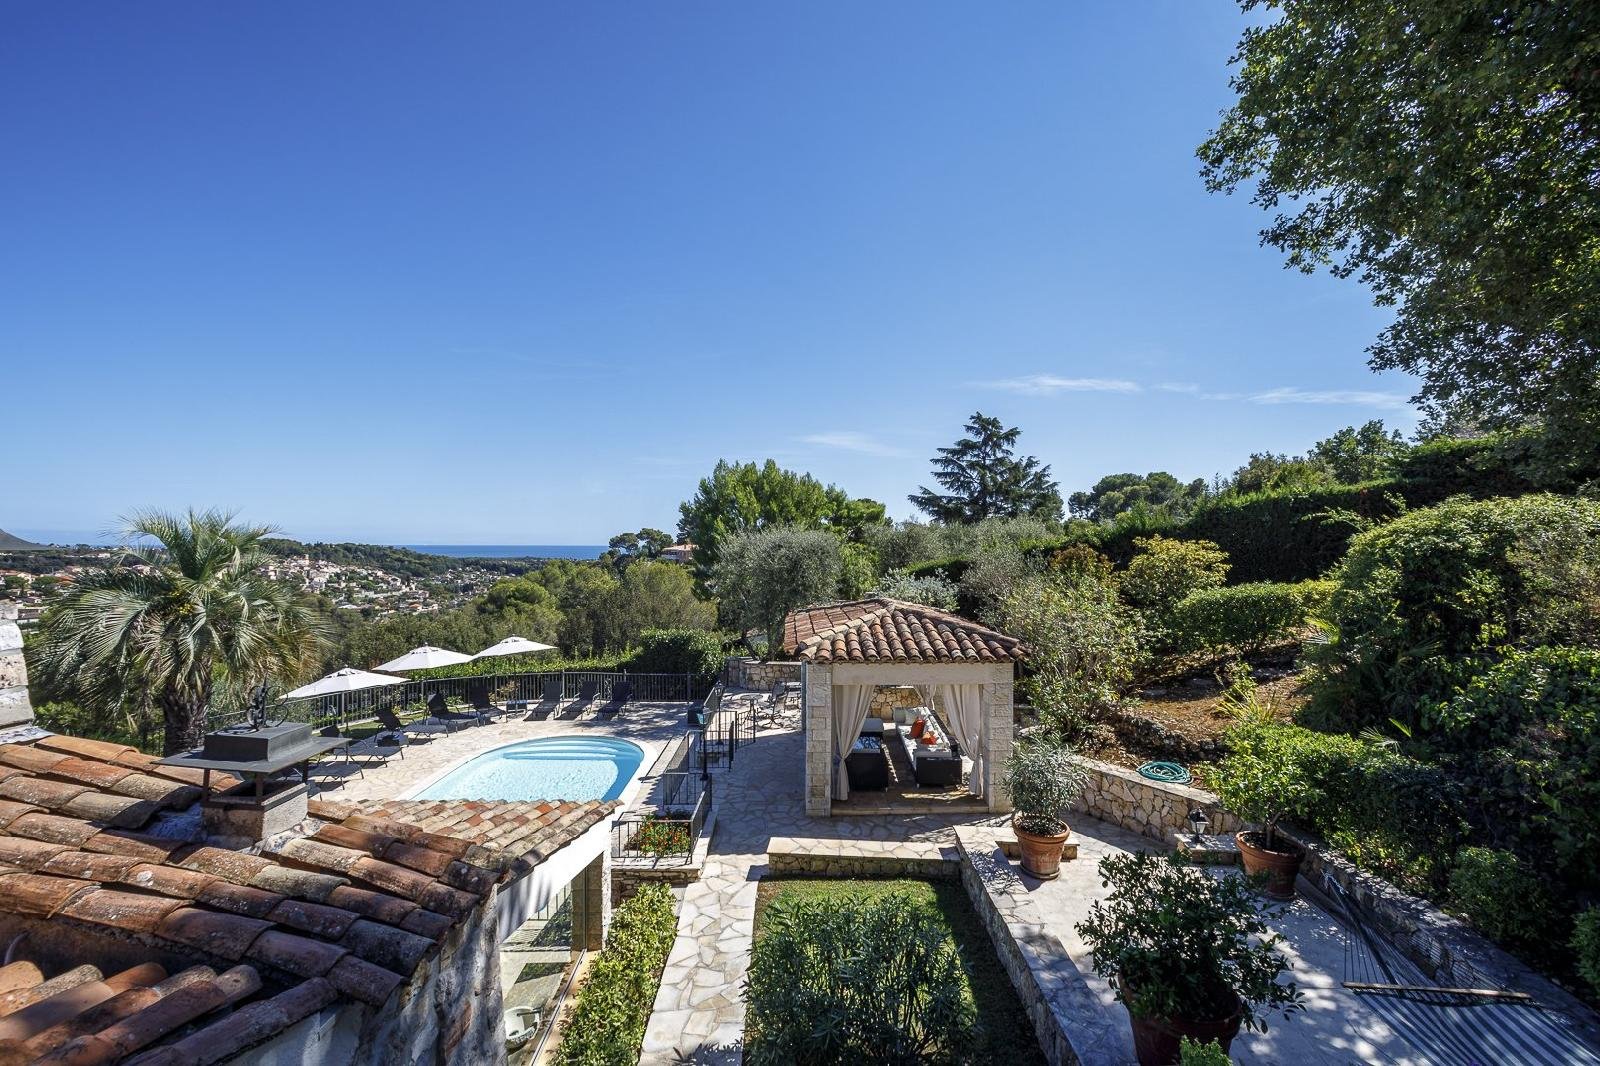 Francis York Charming French Riviera Villa With Hilltop Village And Sea Views 22.jpg